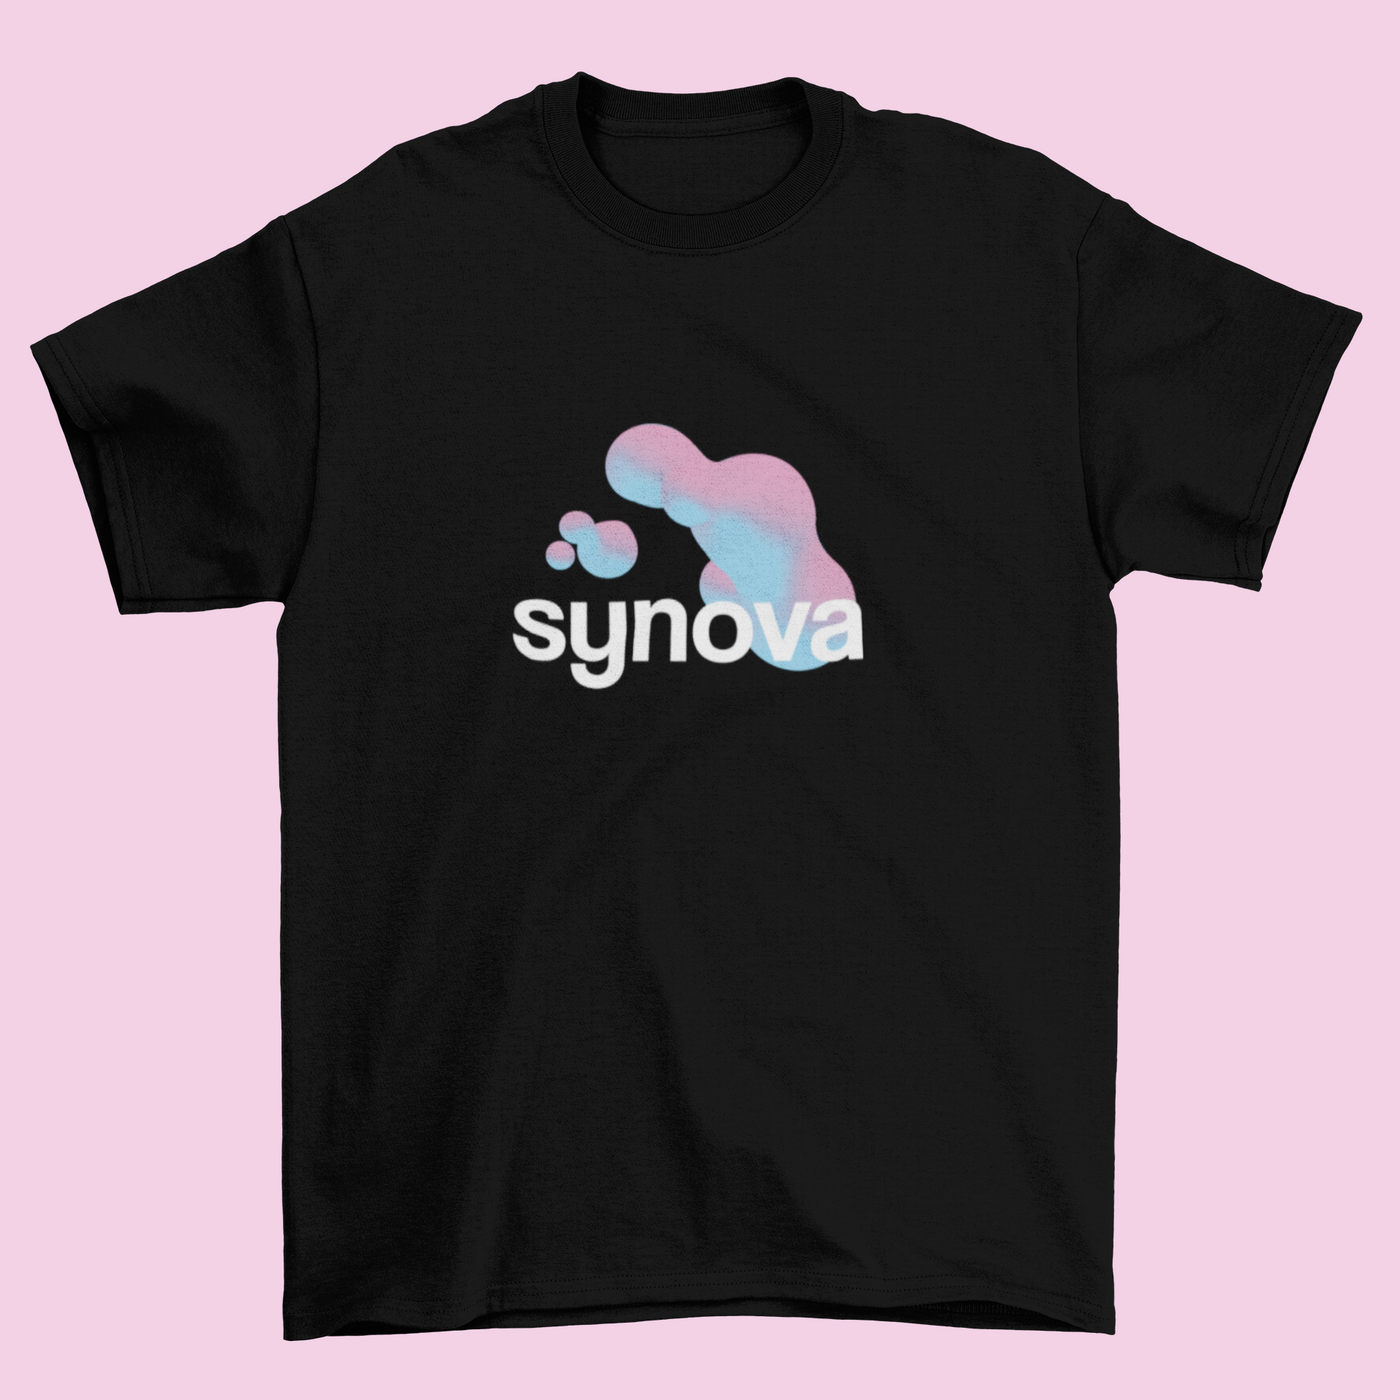 Synova Shirt